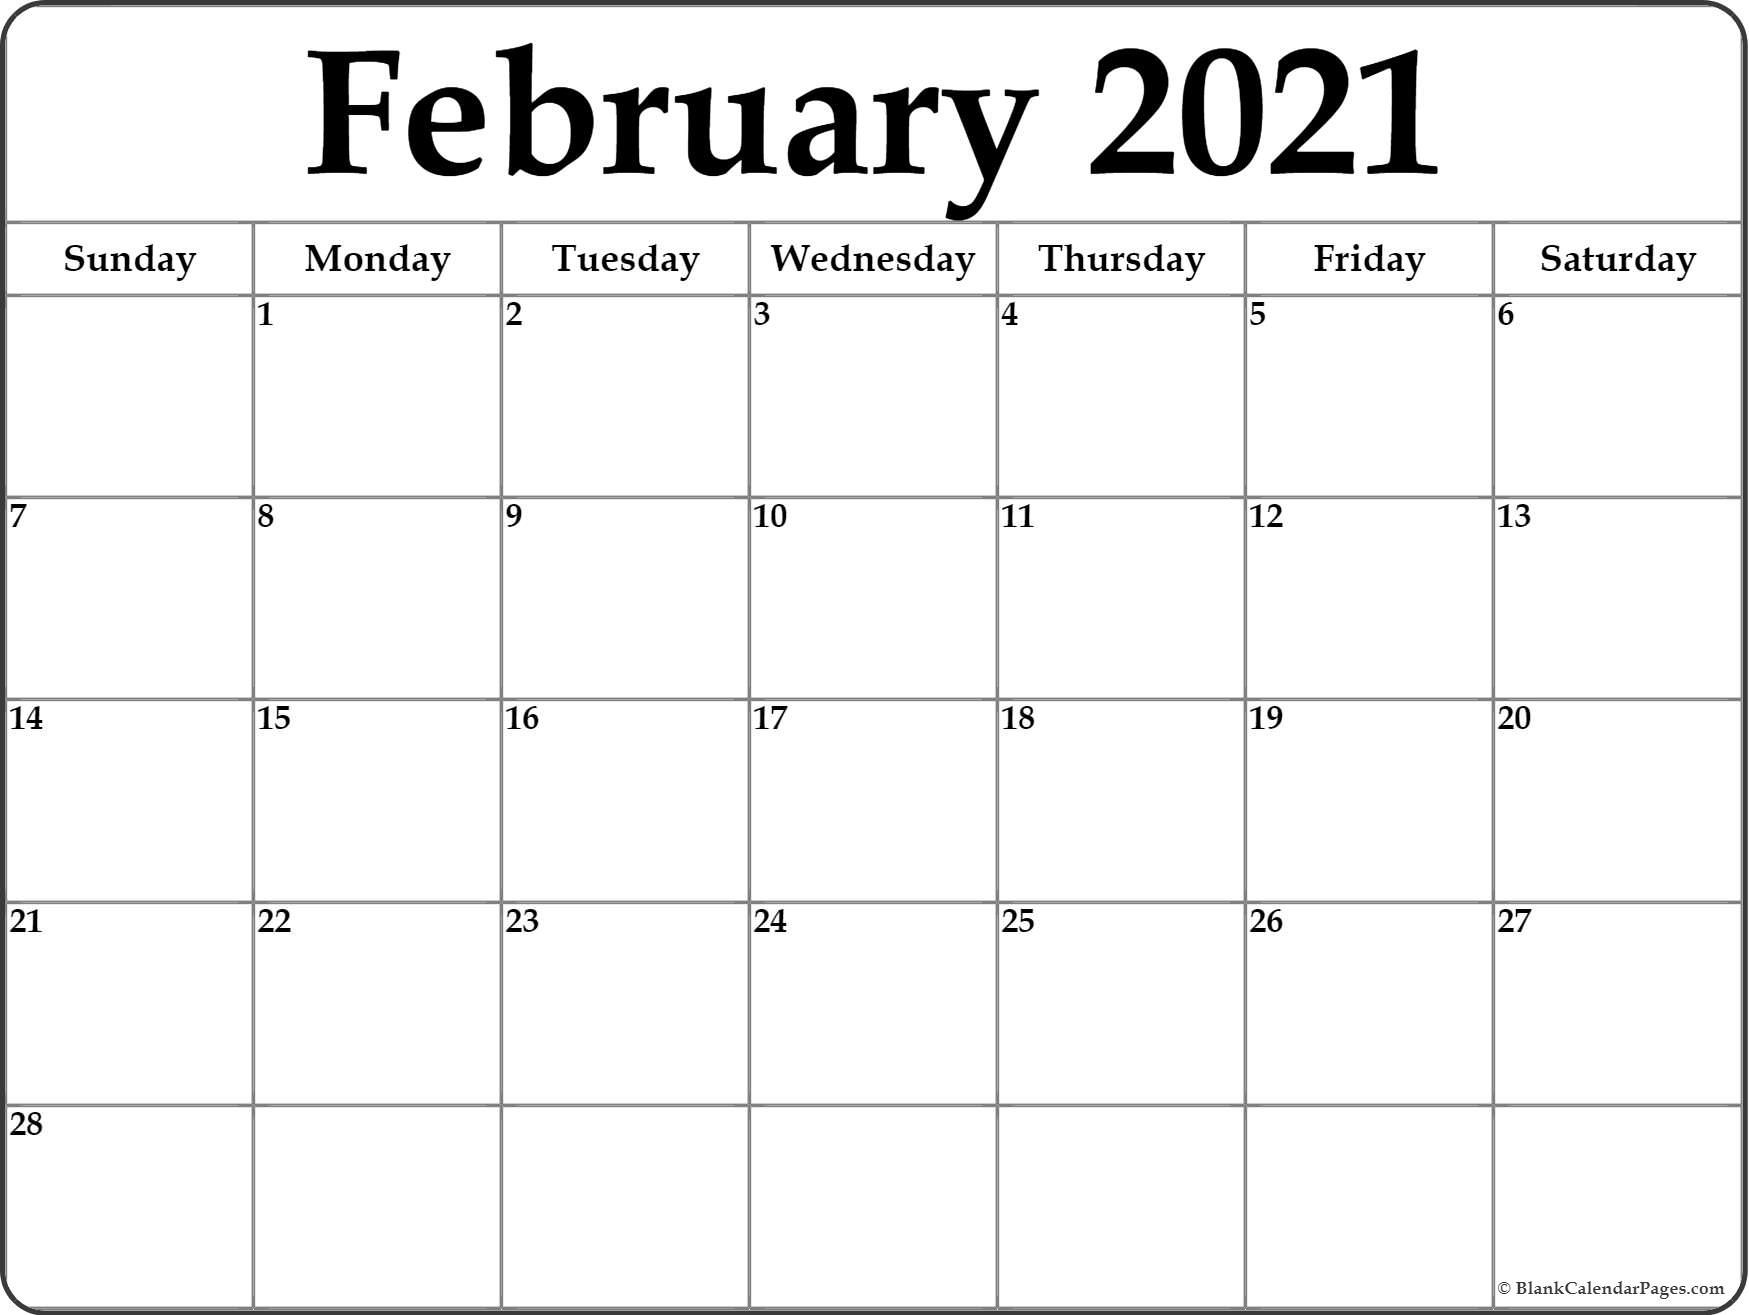 February 2021 Calendar | Free Printable Calendar Free Printable Calendars 2021 With Lines